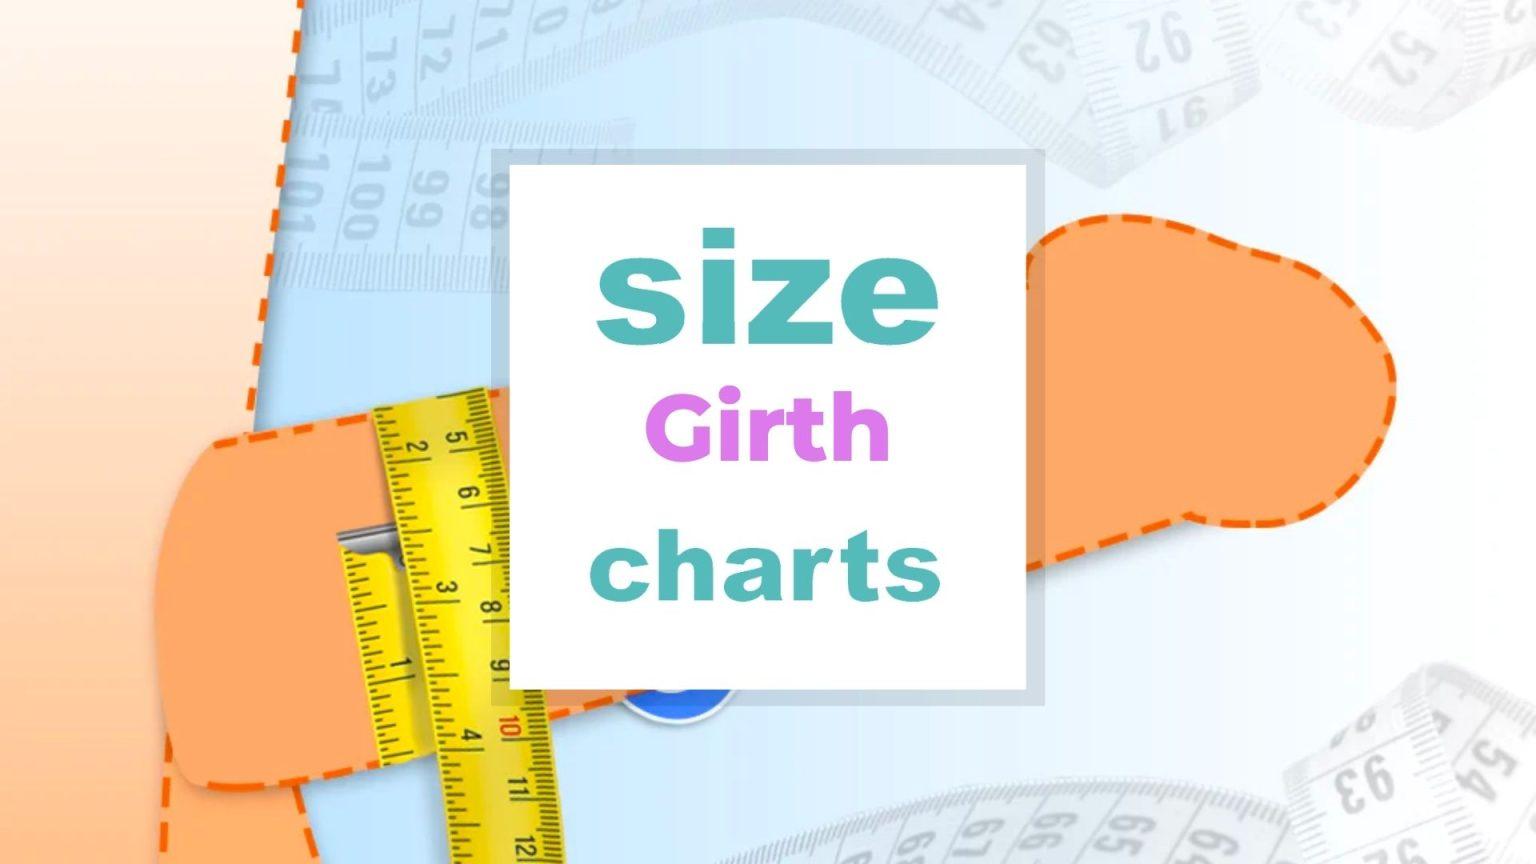 Girth Size Chart - Size-Charts.com - When size matters